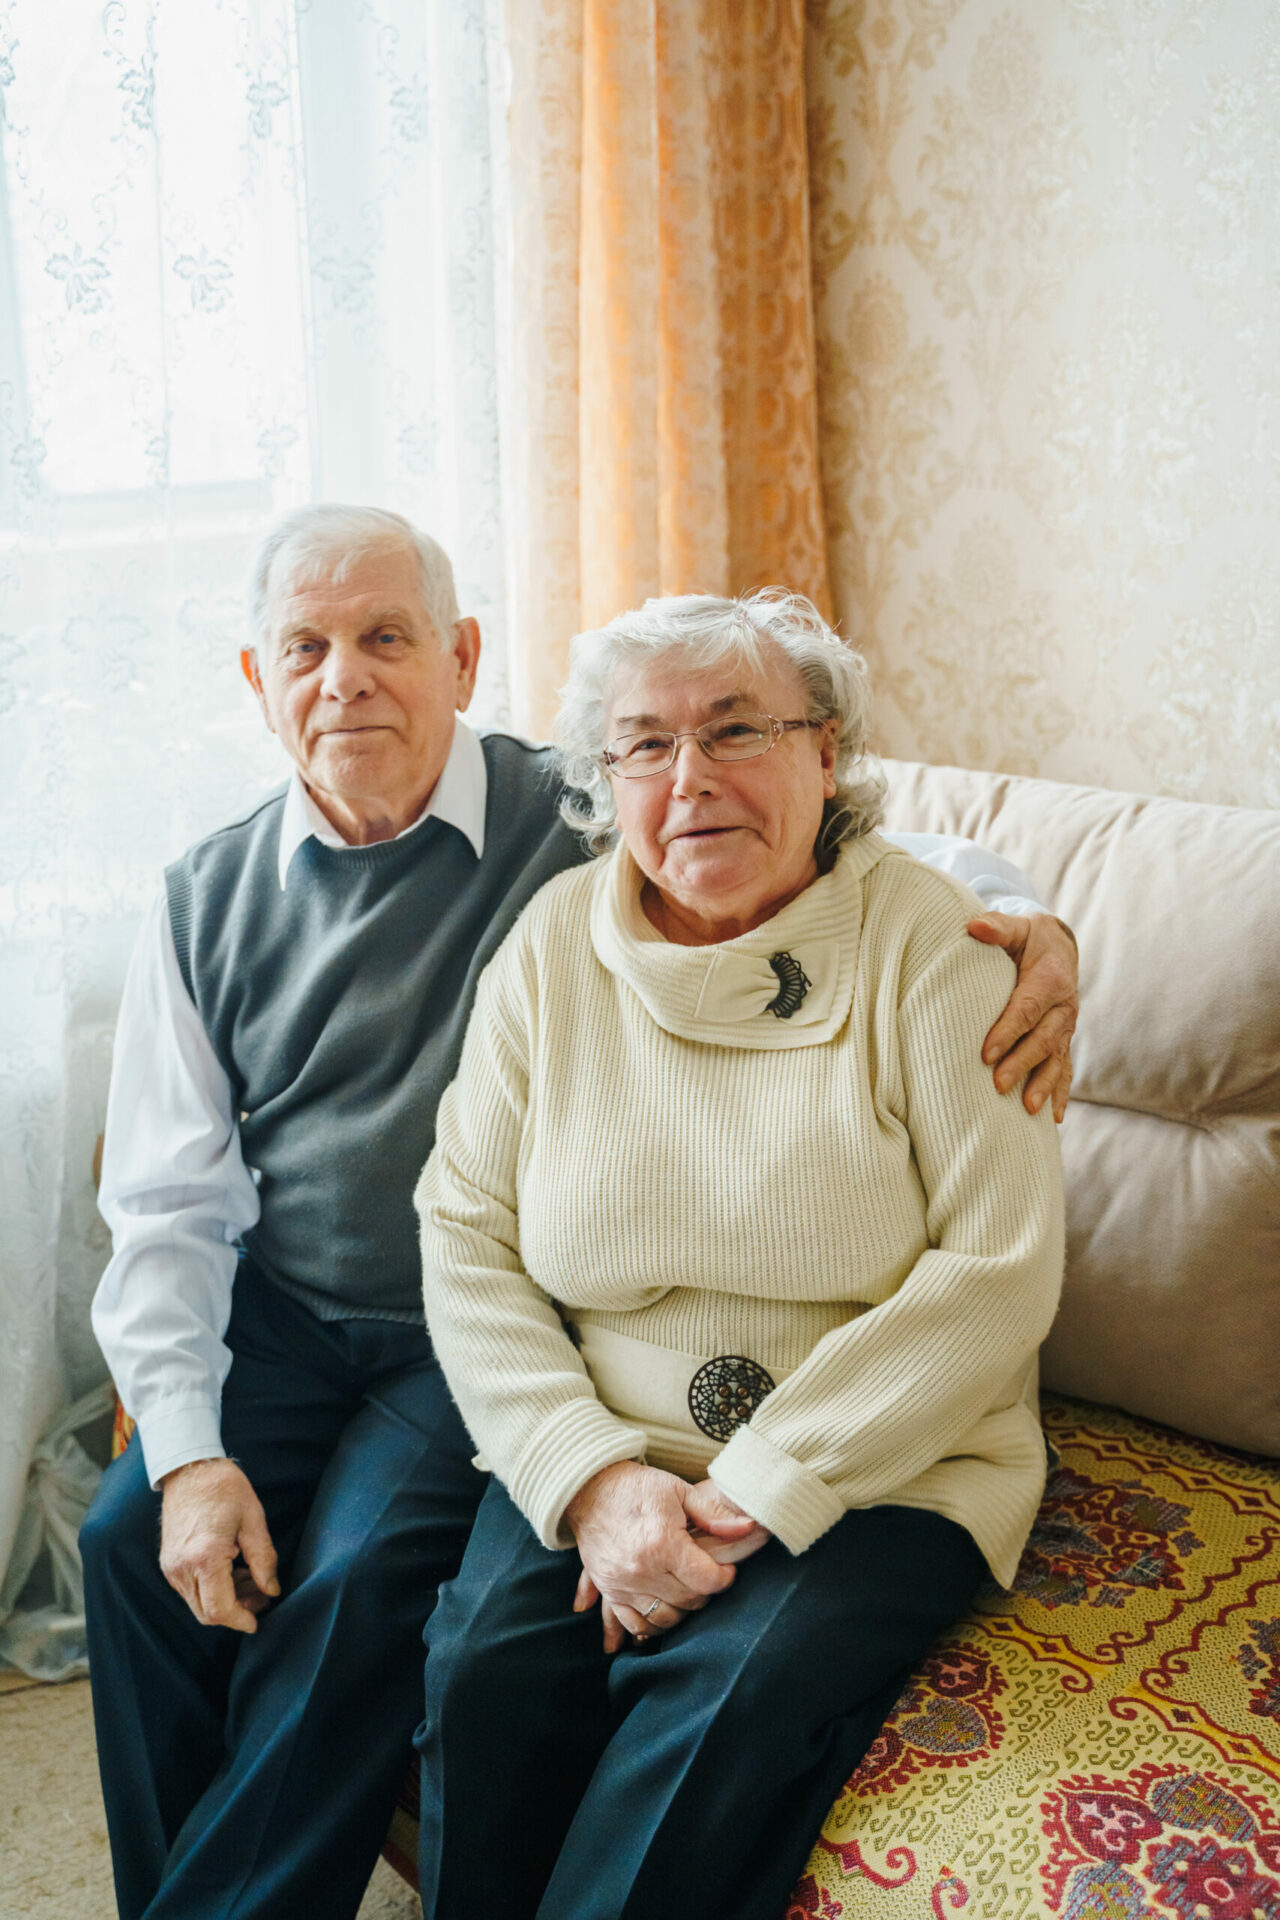 Elderly senior romantic love couple. Old retired man woman together. Aged husband wife in cozy home sweater.Elder hugging kissing people pensioner.Happy family longevity.Tender feelings relationships.